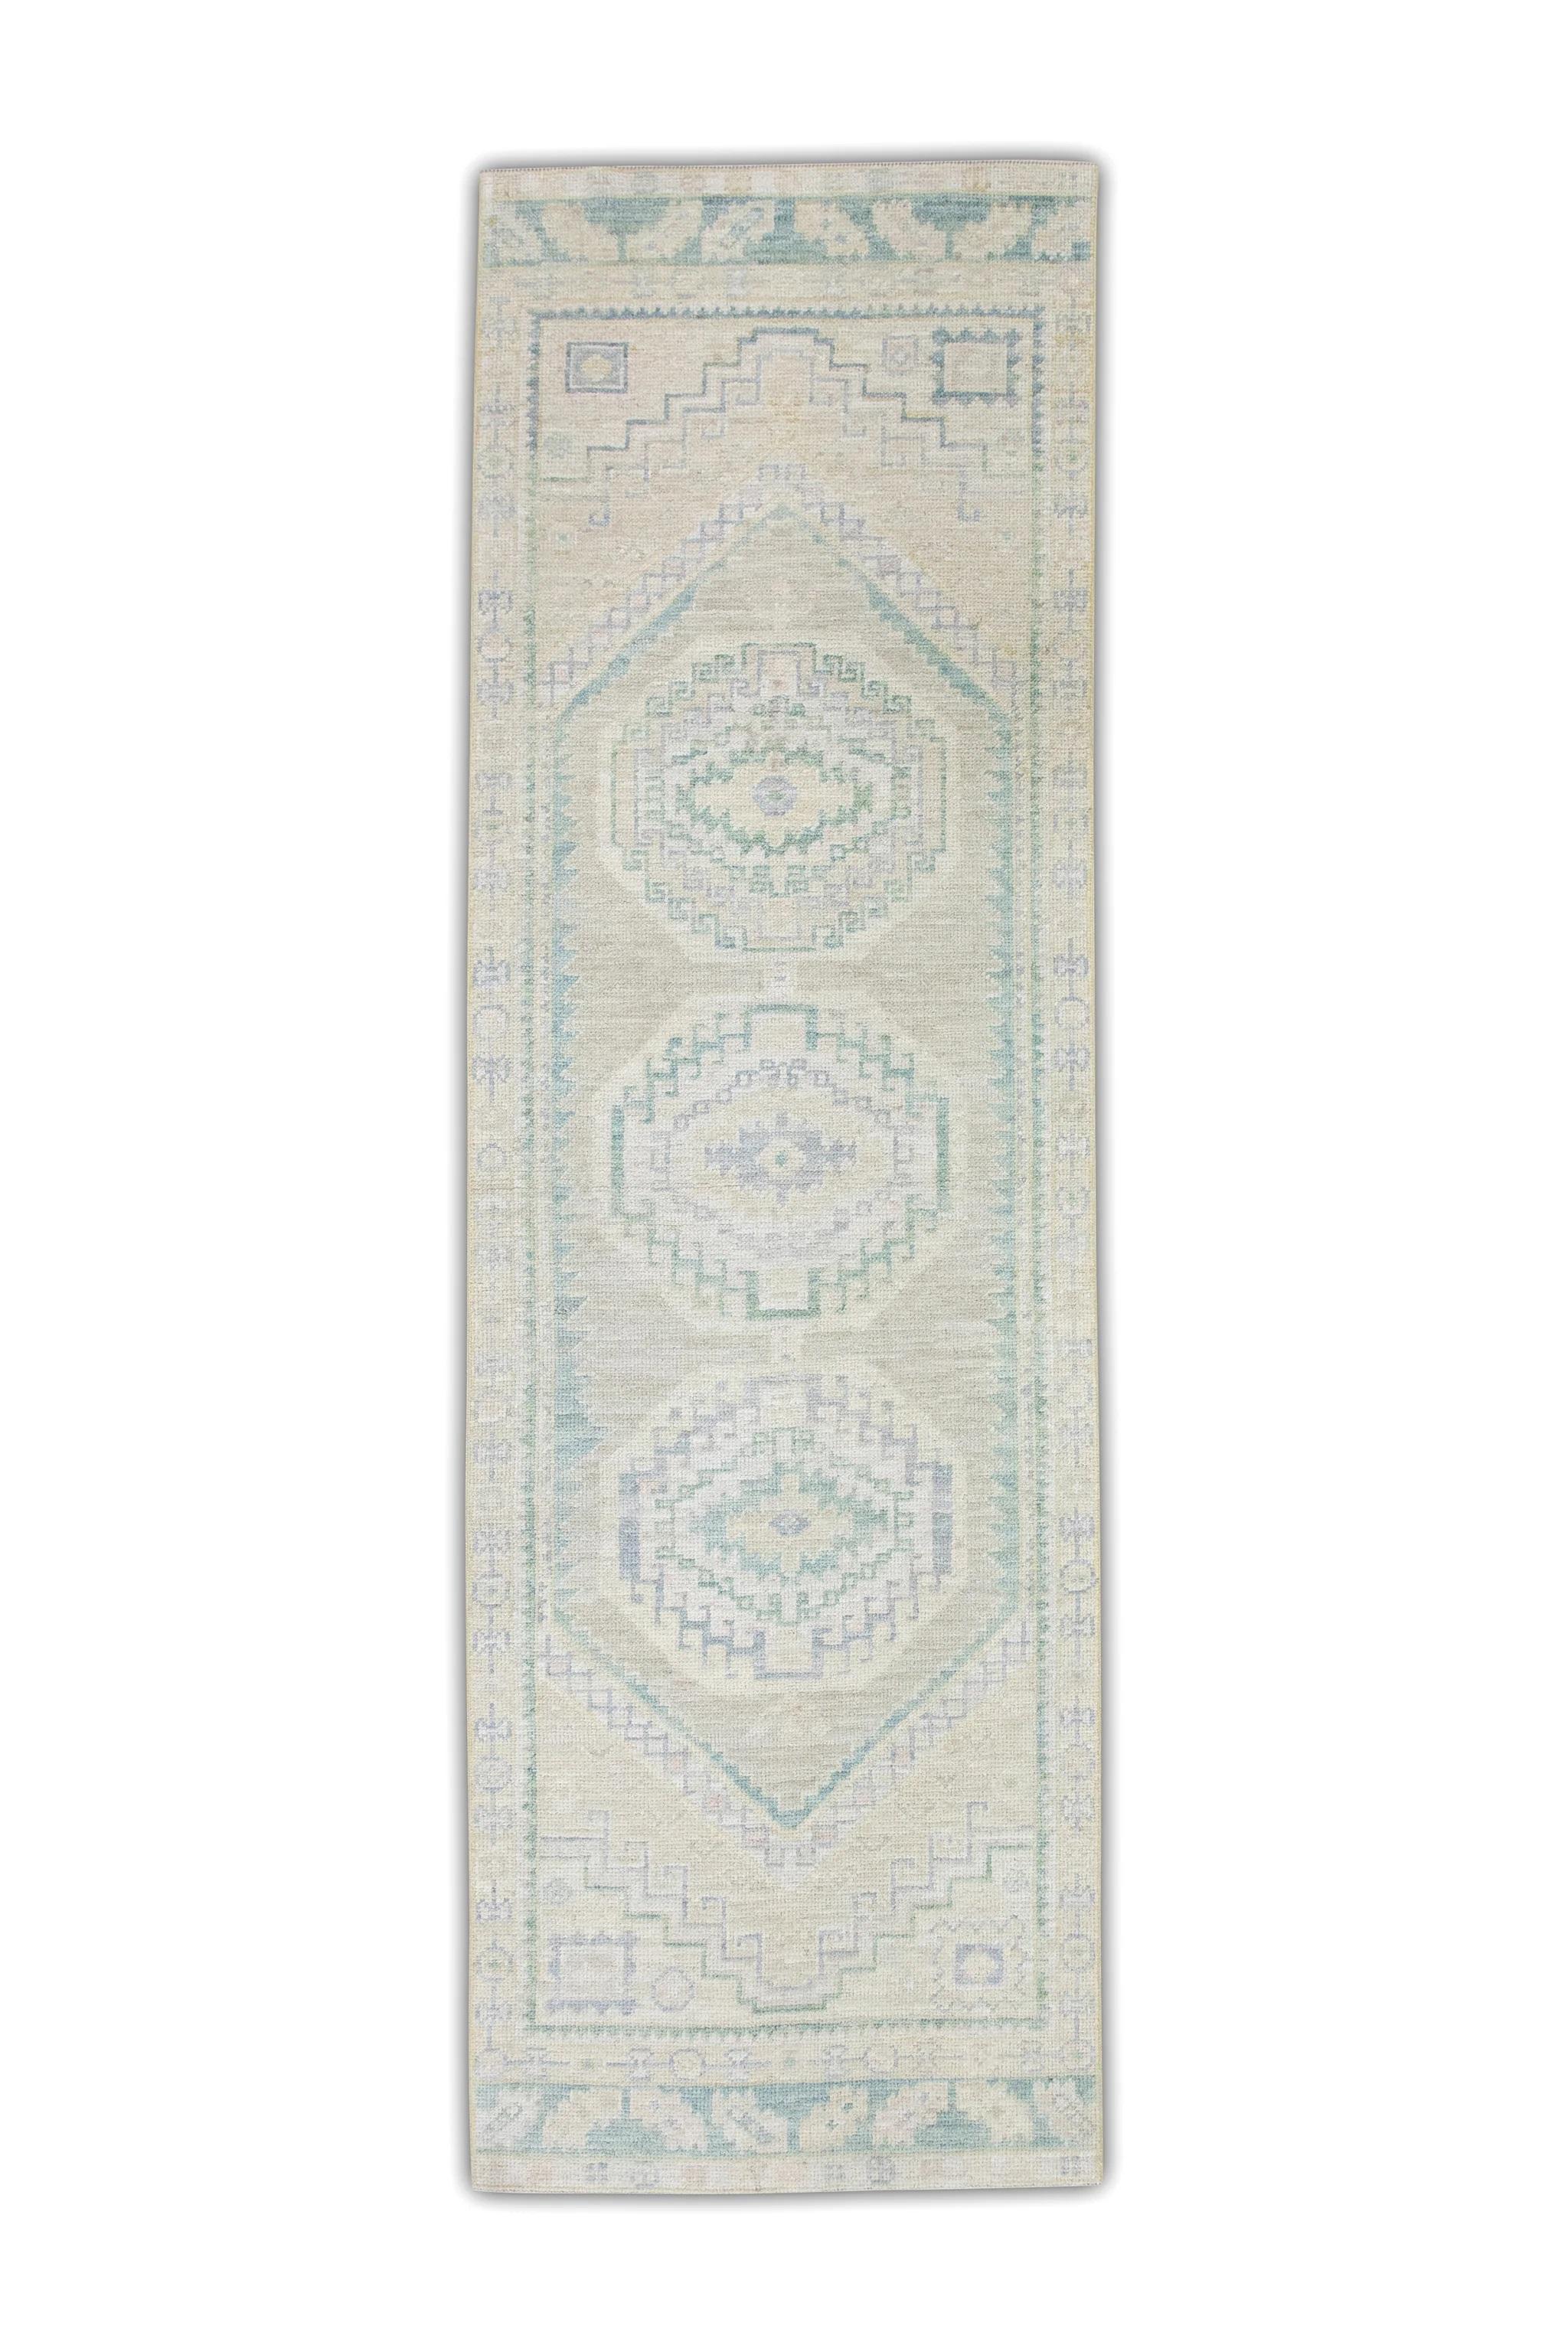 Medallion Design Handwoven Wool Turkish Oushak Rug in Blue & Green 2'10